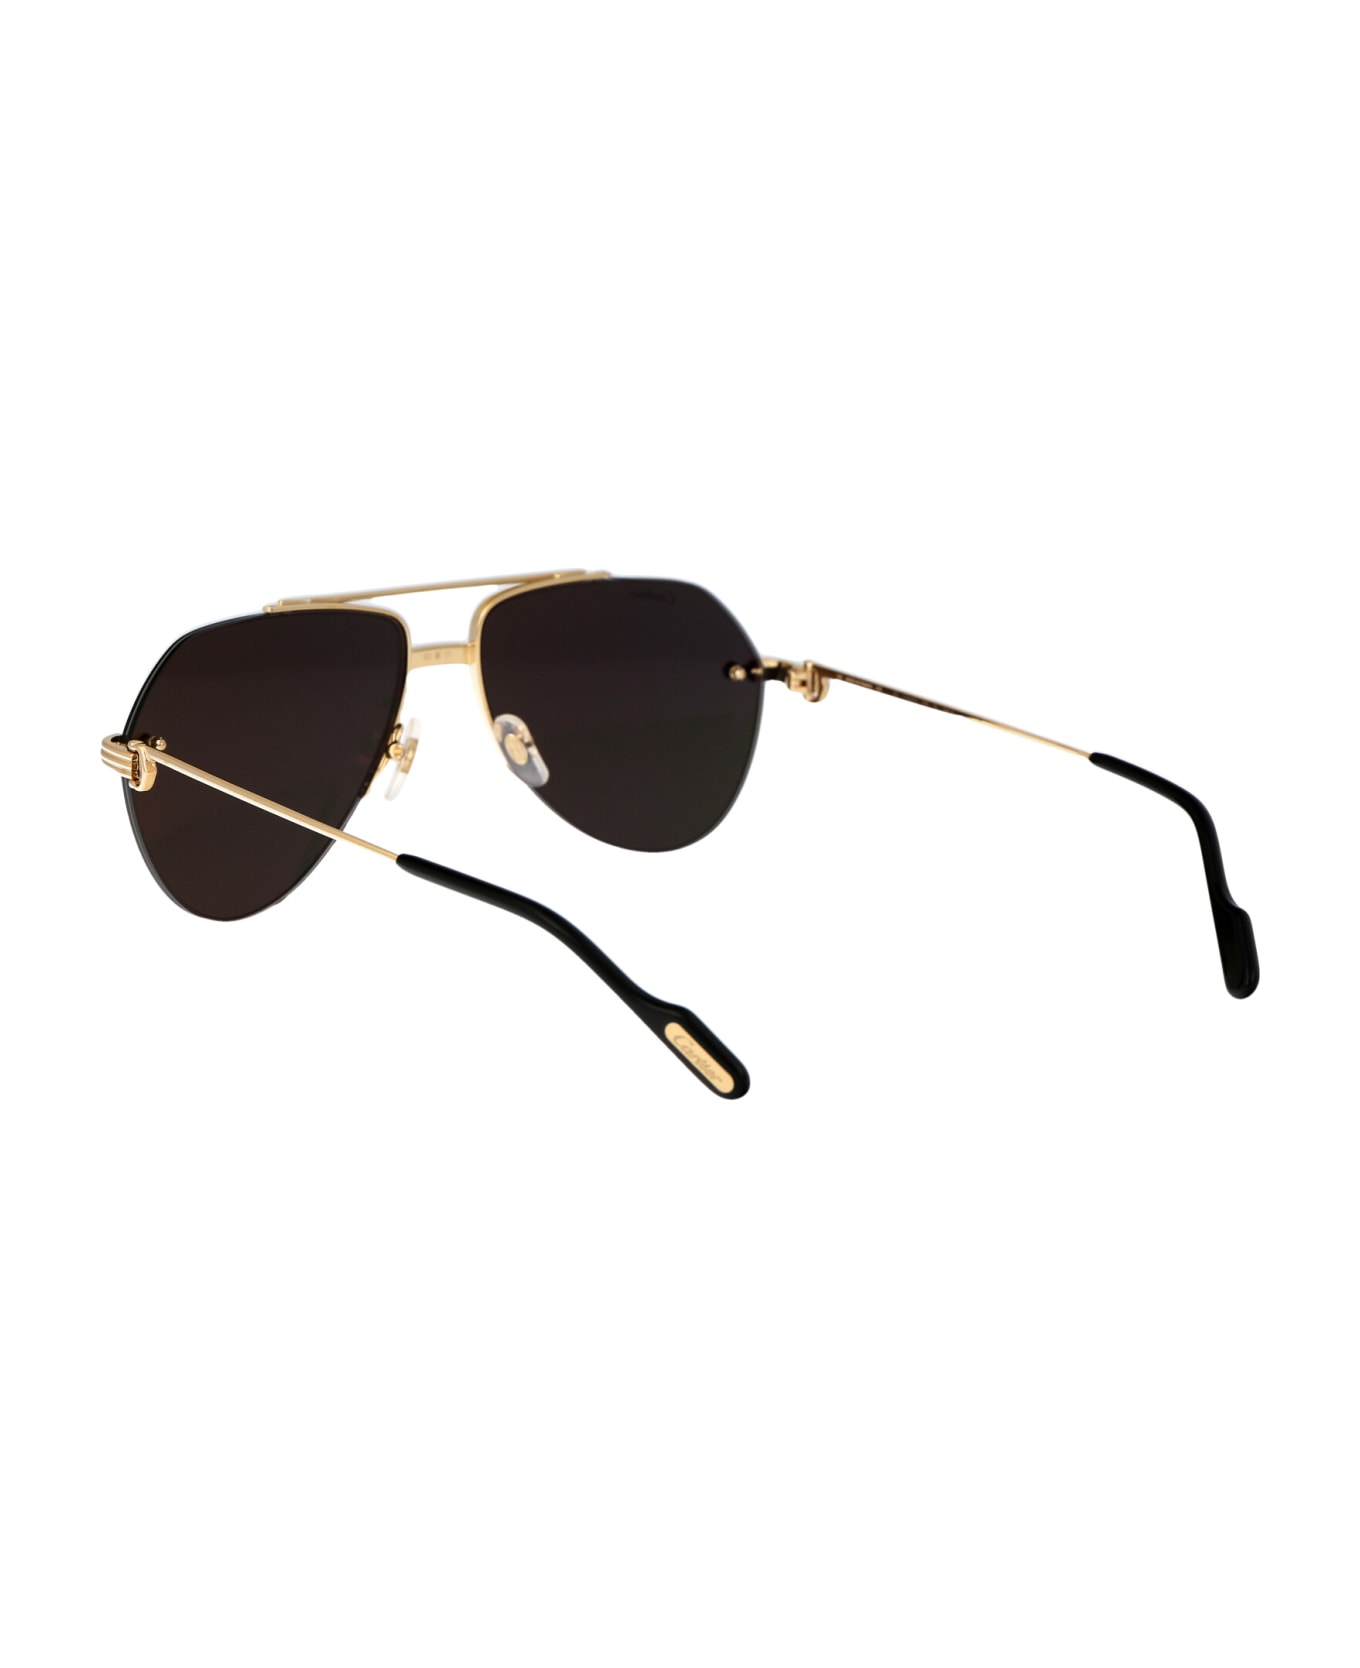 Cartier Eyewear Ct0427s Sunglasses - 005 GOLD GOLD GREY